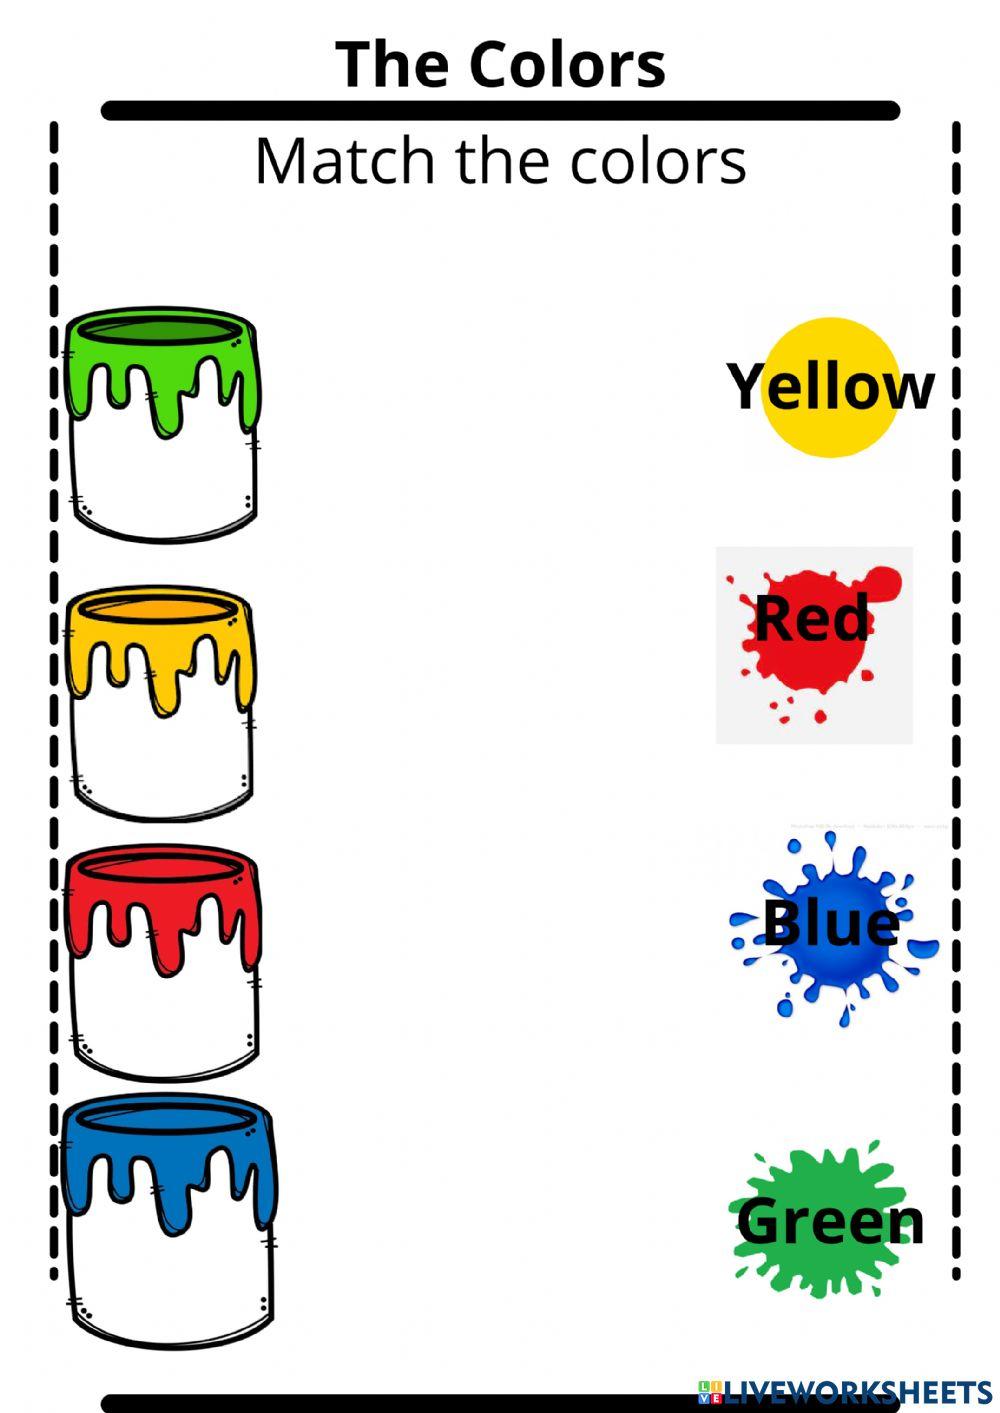 Colors online exercise for Prescolar | Live Worksheets